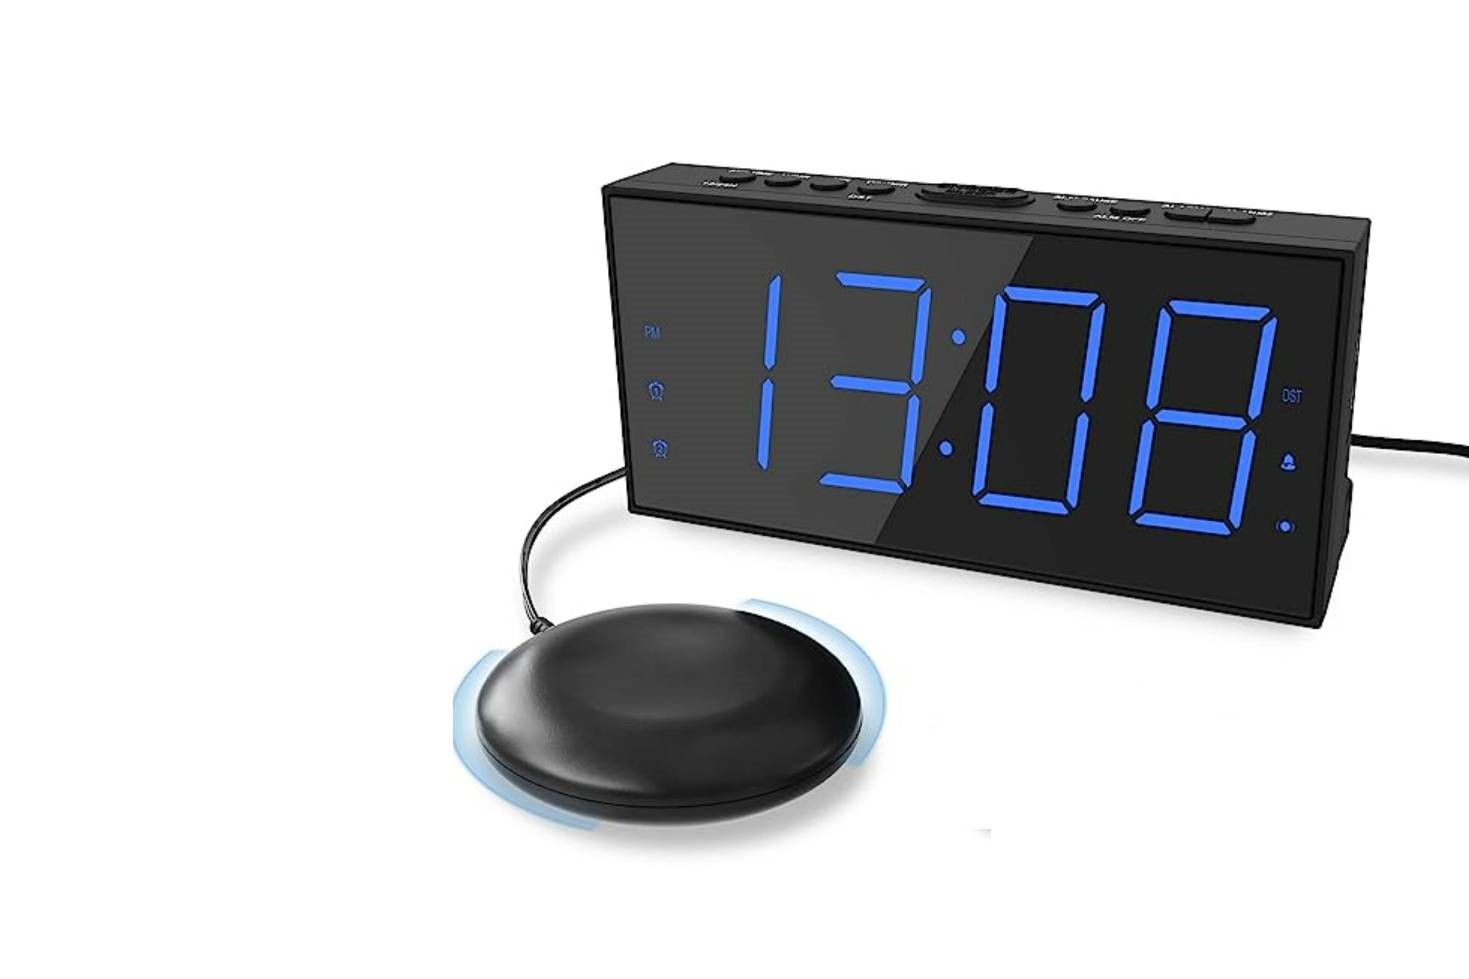 Vibrating Alarm Clock